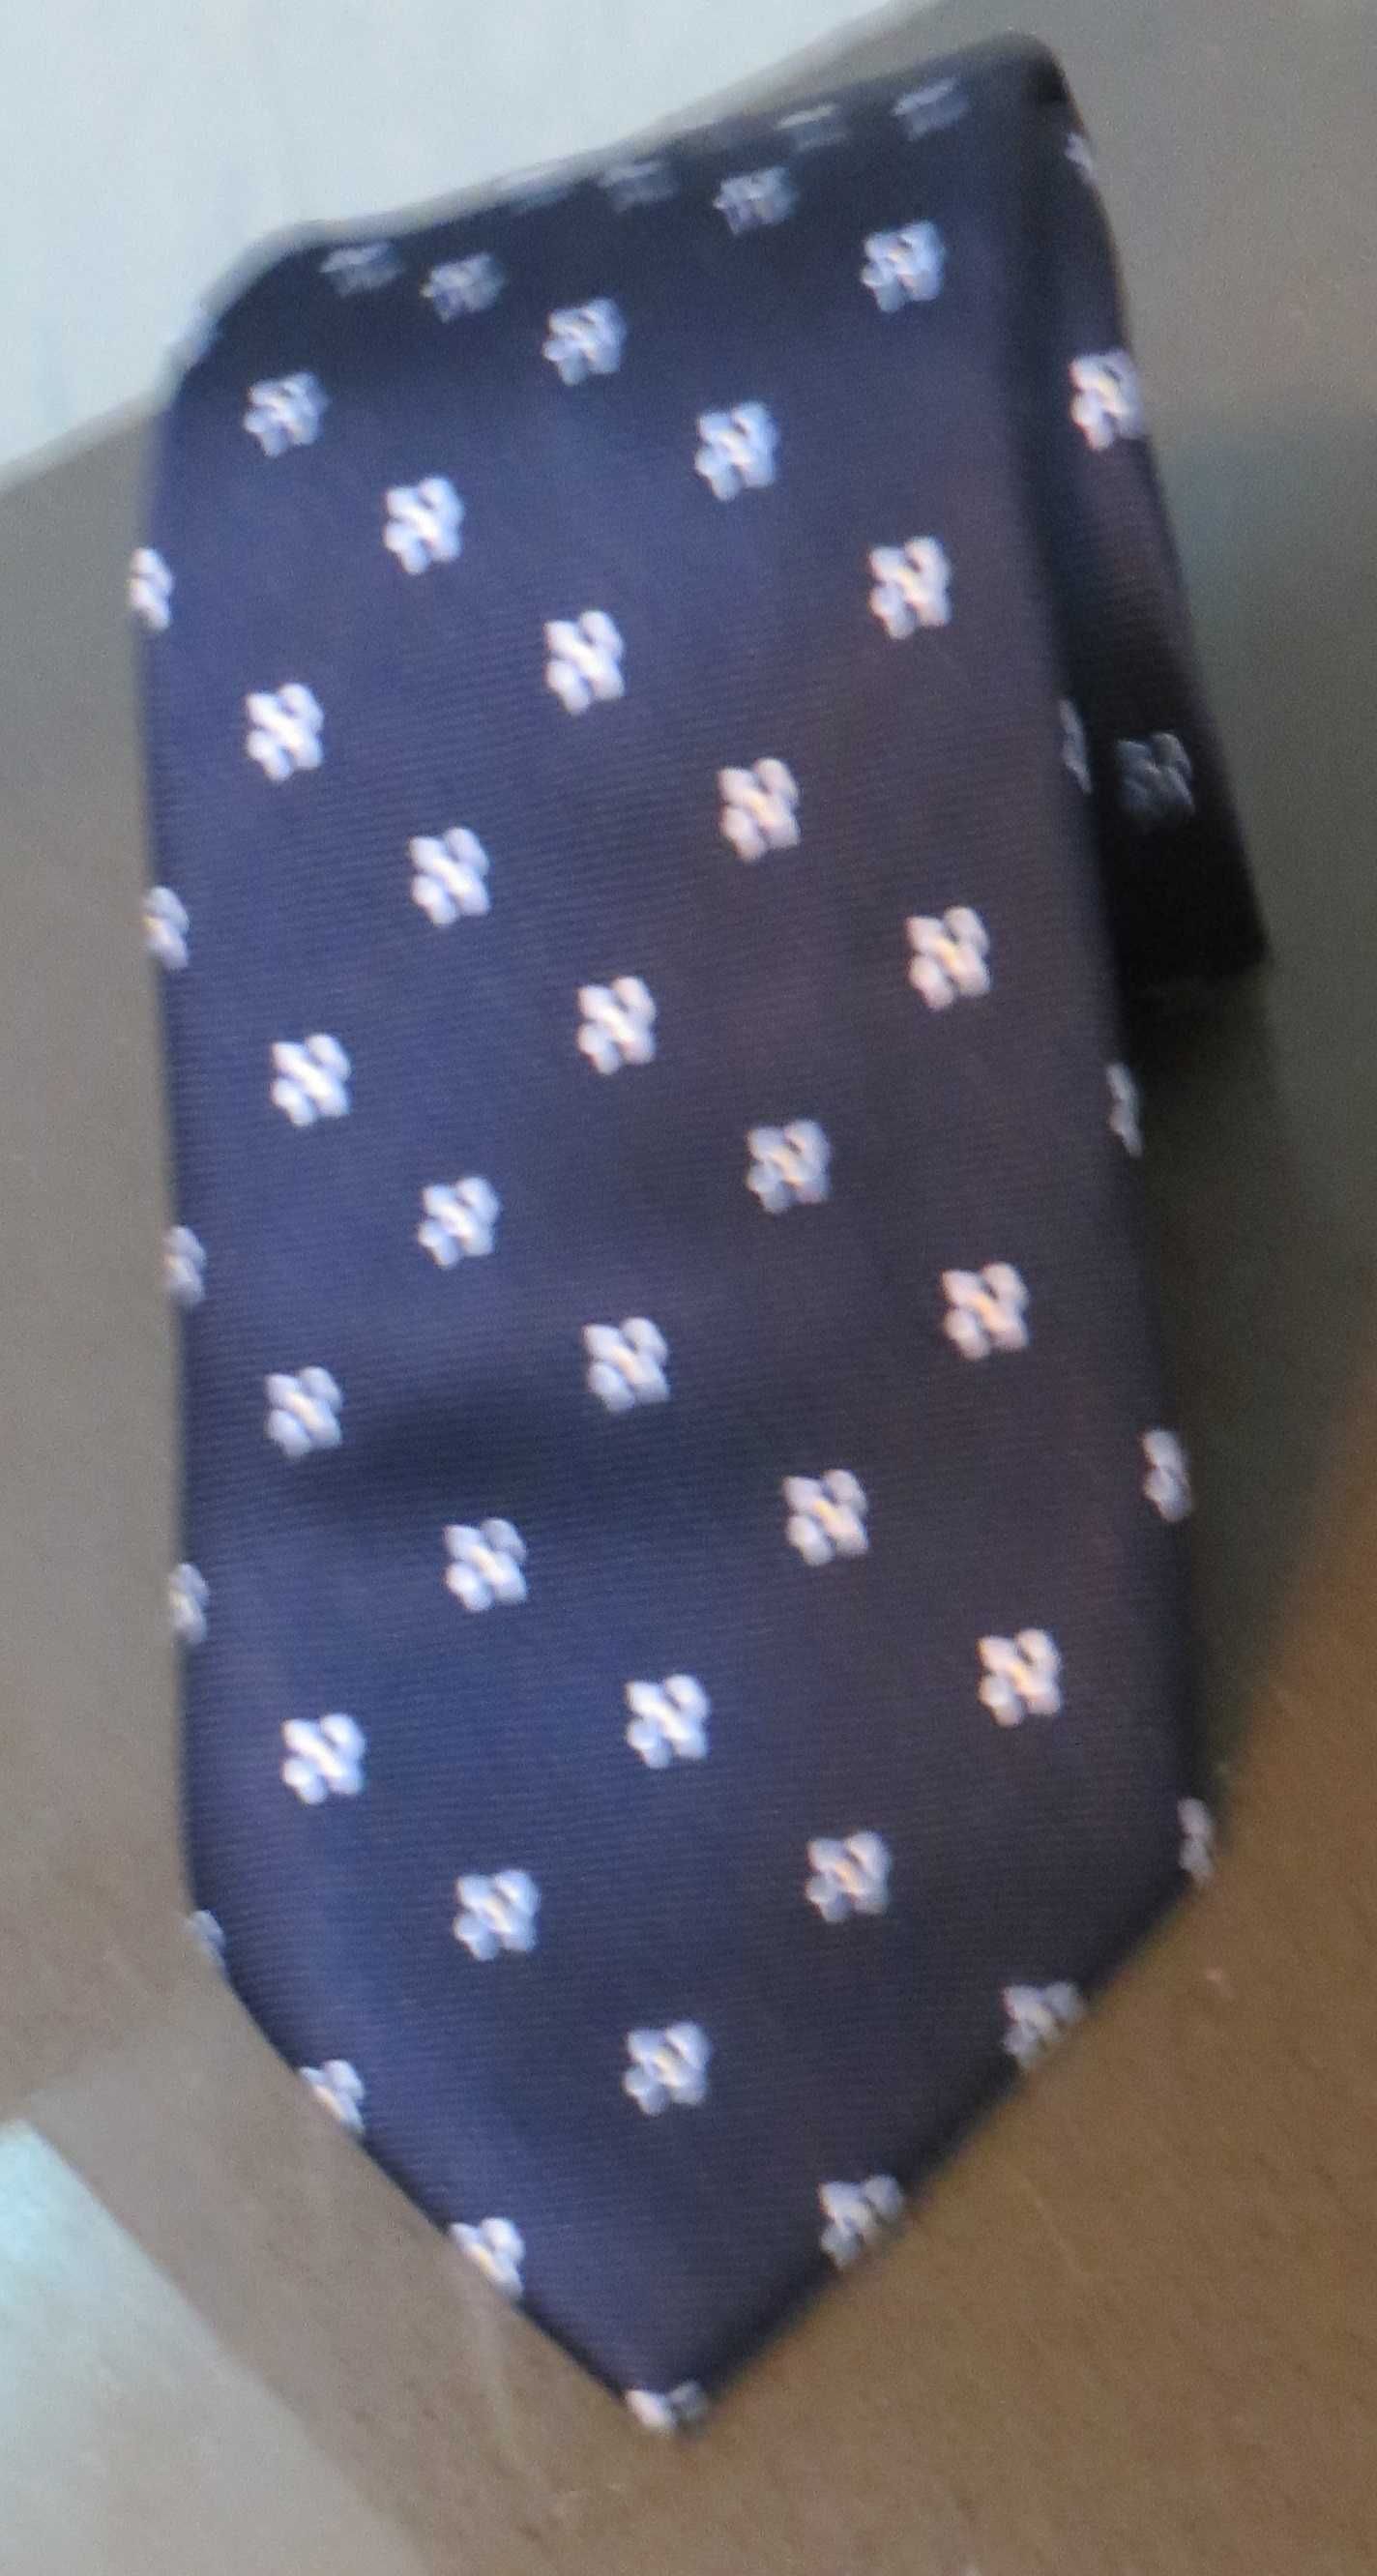 Gravata azul escuro com motivos a branco - 100% seda - In Extenso